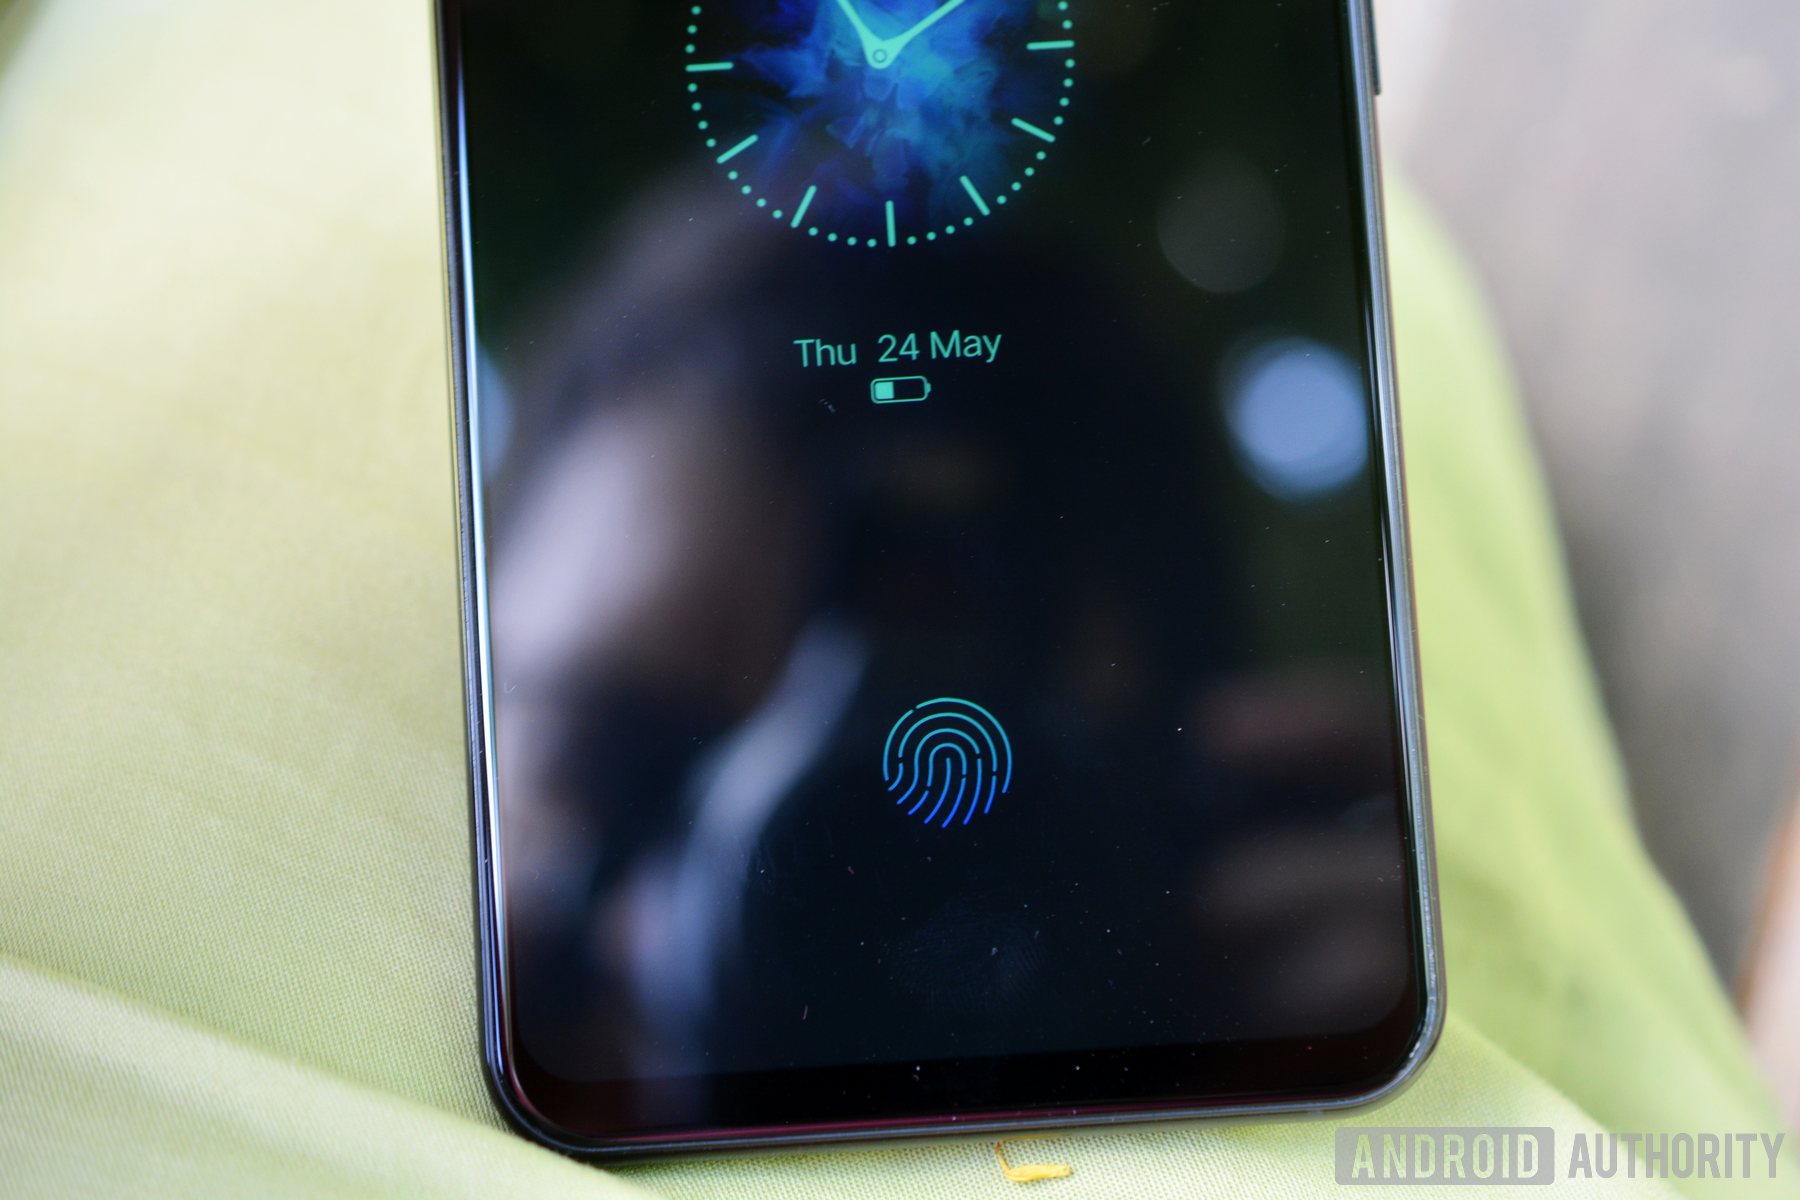 The fingerprint sensor icon on Vivo X21 ud